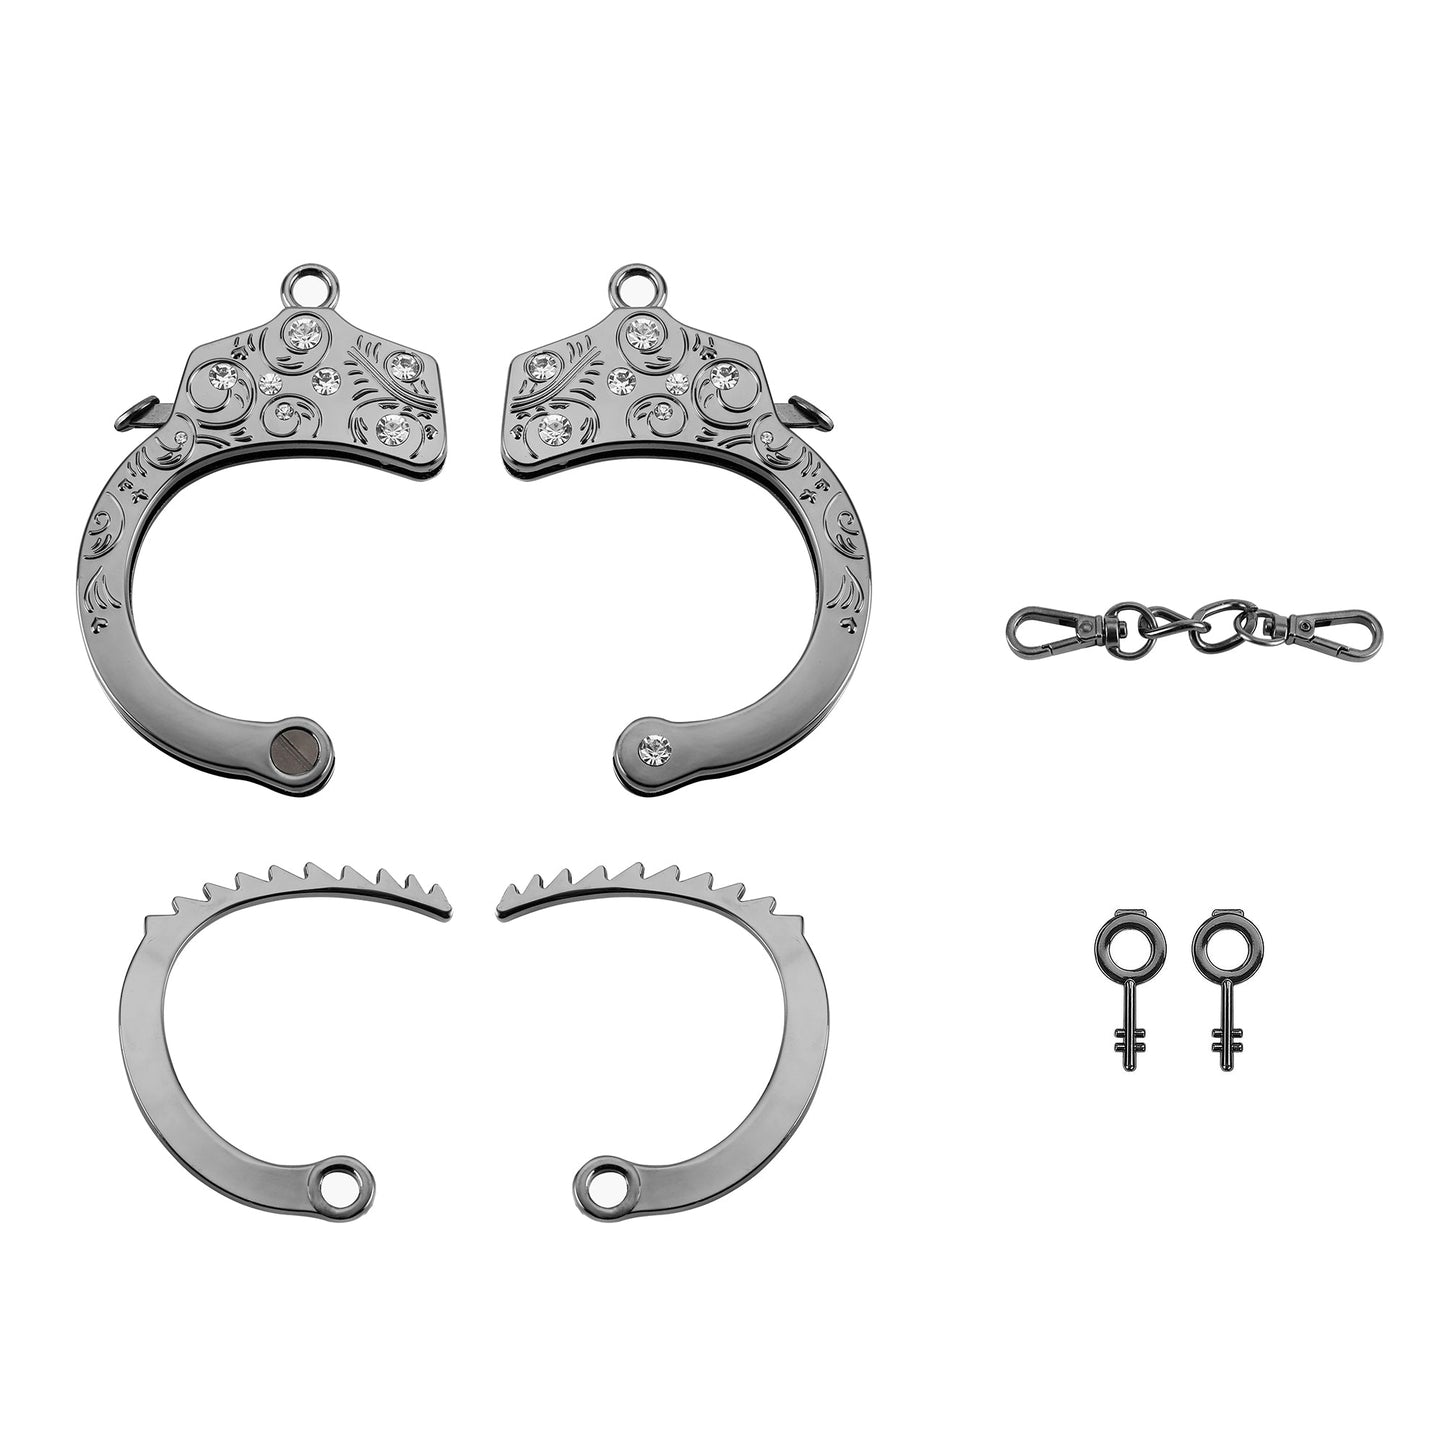 ROOMFUN ZW-027 SM Metal Diamond Fetish Restraint Handcuffs